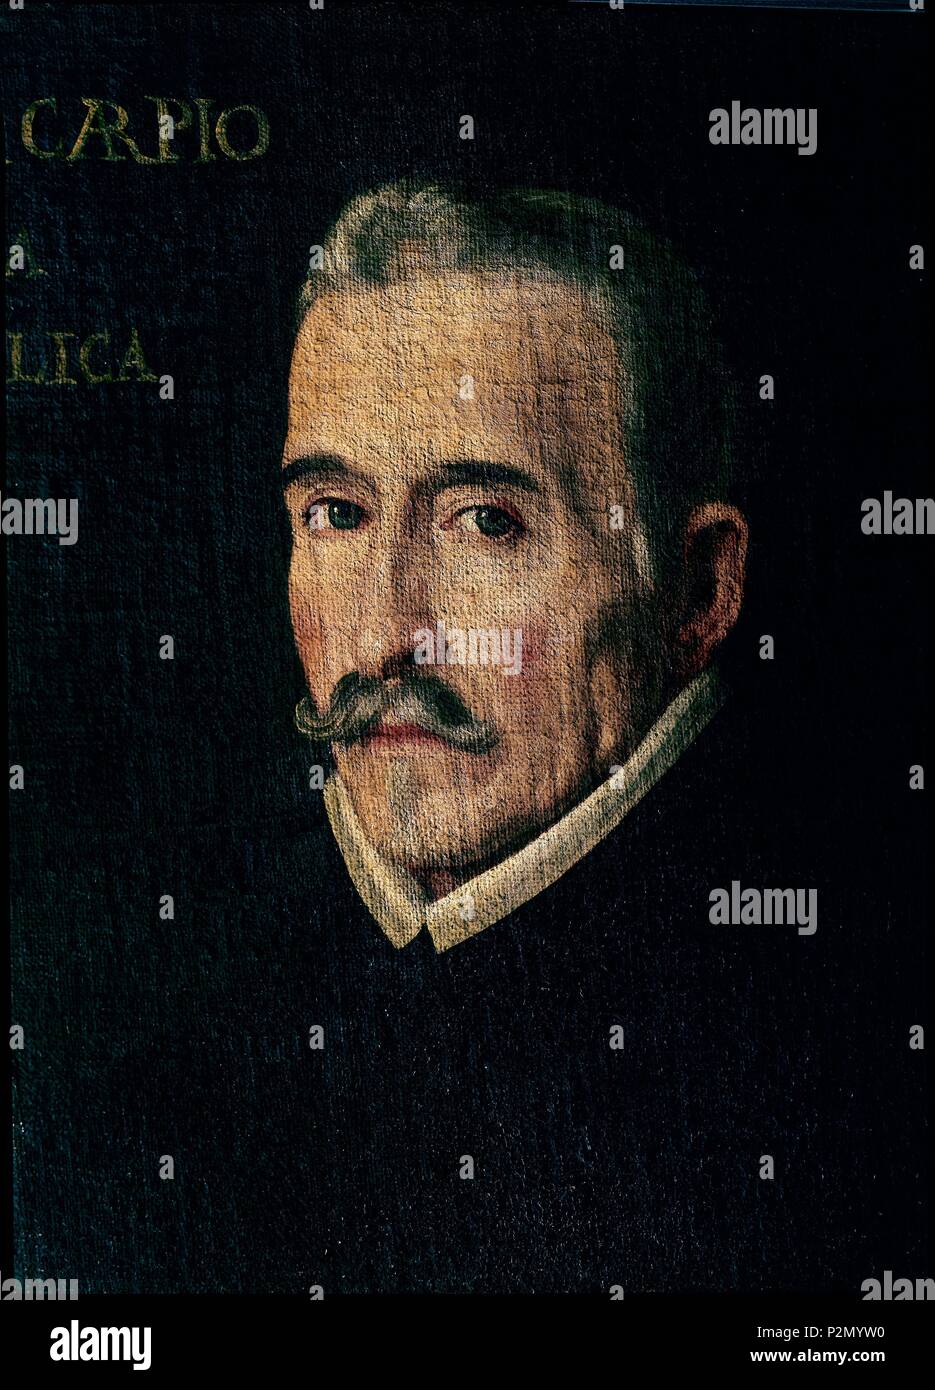 LOPE FELIX DE VEGA Y CARPIO (1562-1635) - DETALLE DEL  ROSTRO (CONJ Nº 4152). Location: CASA MUSEO DE LOPE DE VEGA, MADRID. Stock Photo